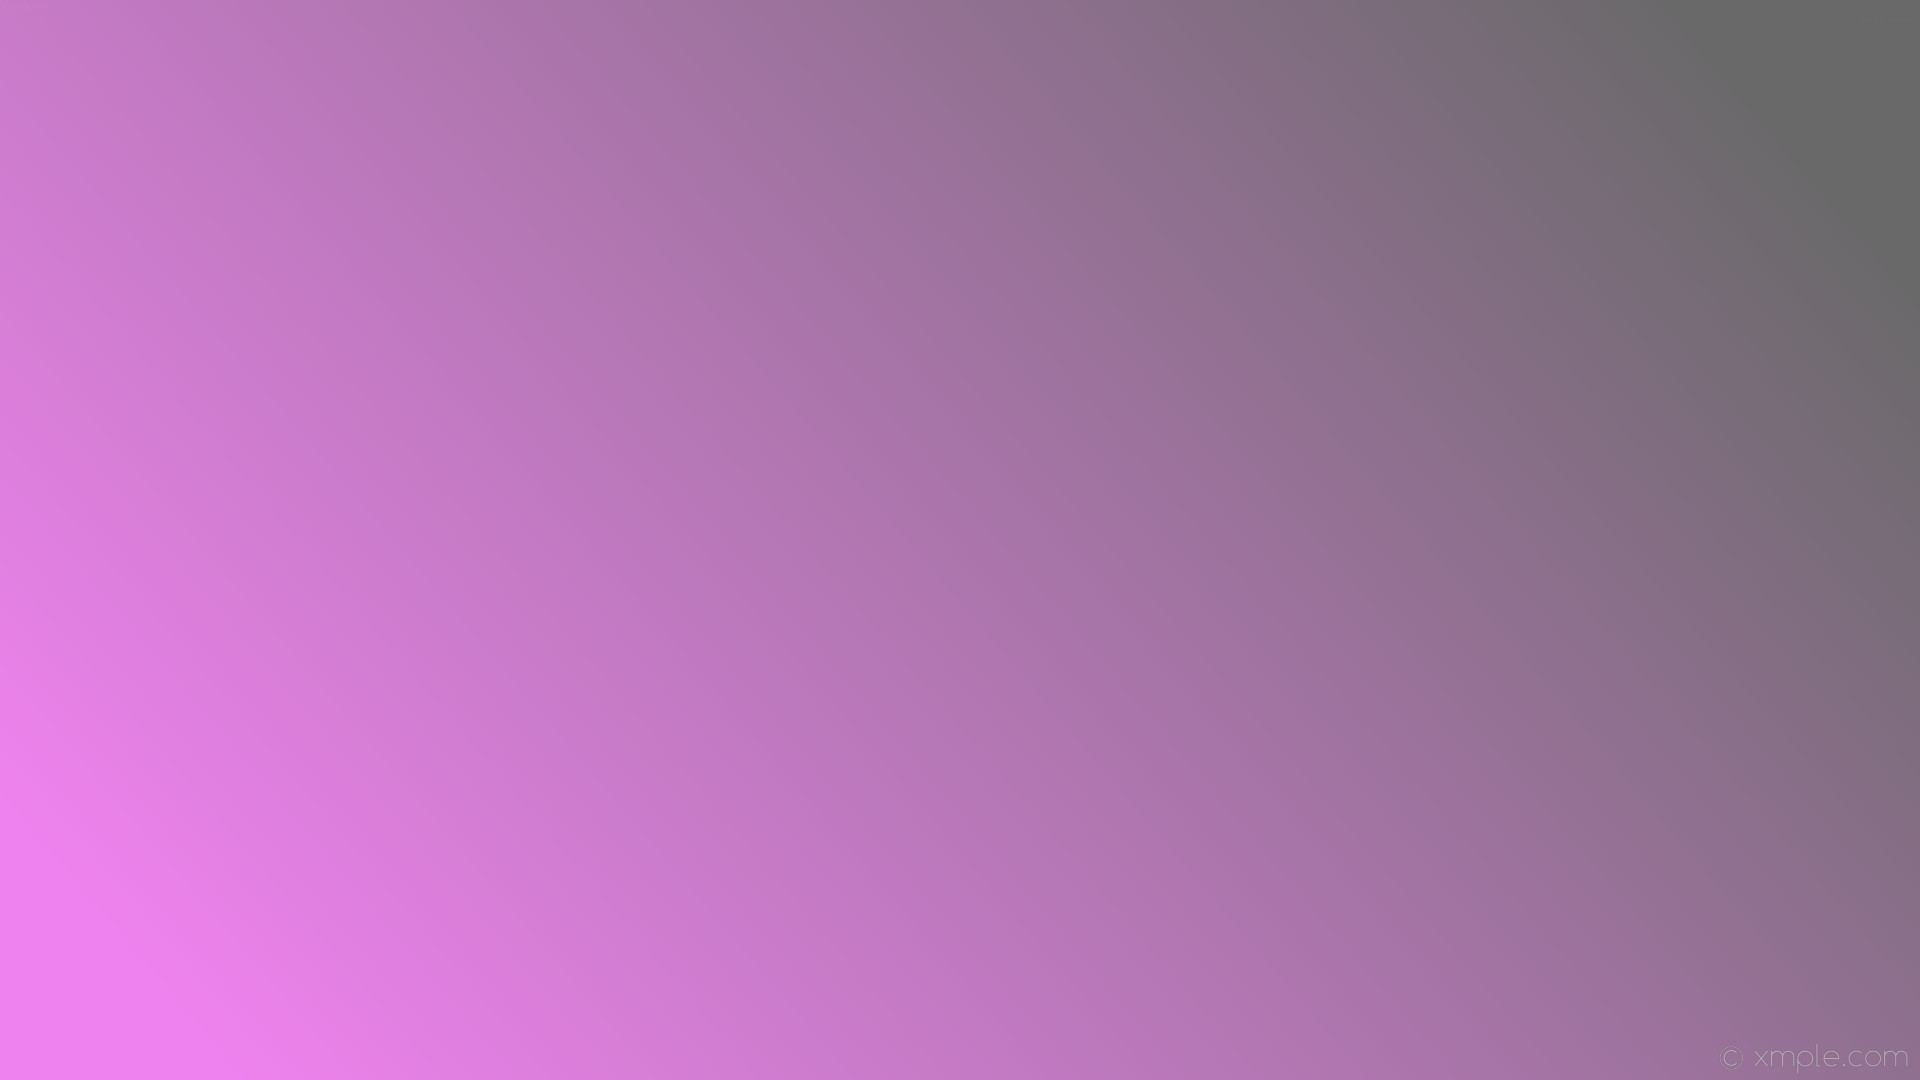 1920x1080 wallpaper purple linear grey gradient violet dim gray #ee82ee #696969 195Â°